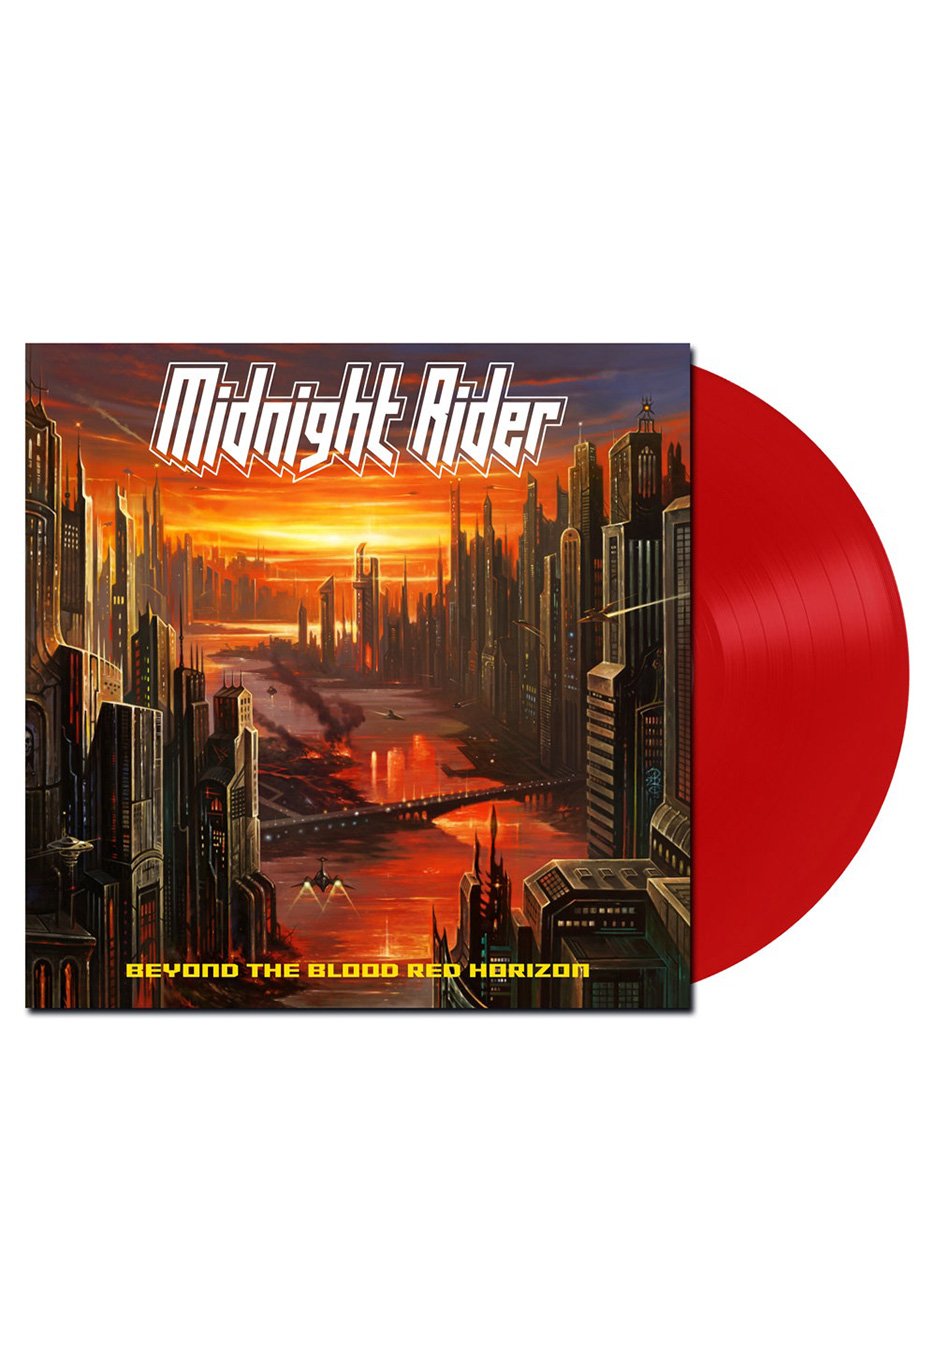 Midnight Rider - Beyond The Blood Horizon Red - Colored Vinyl